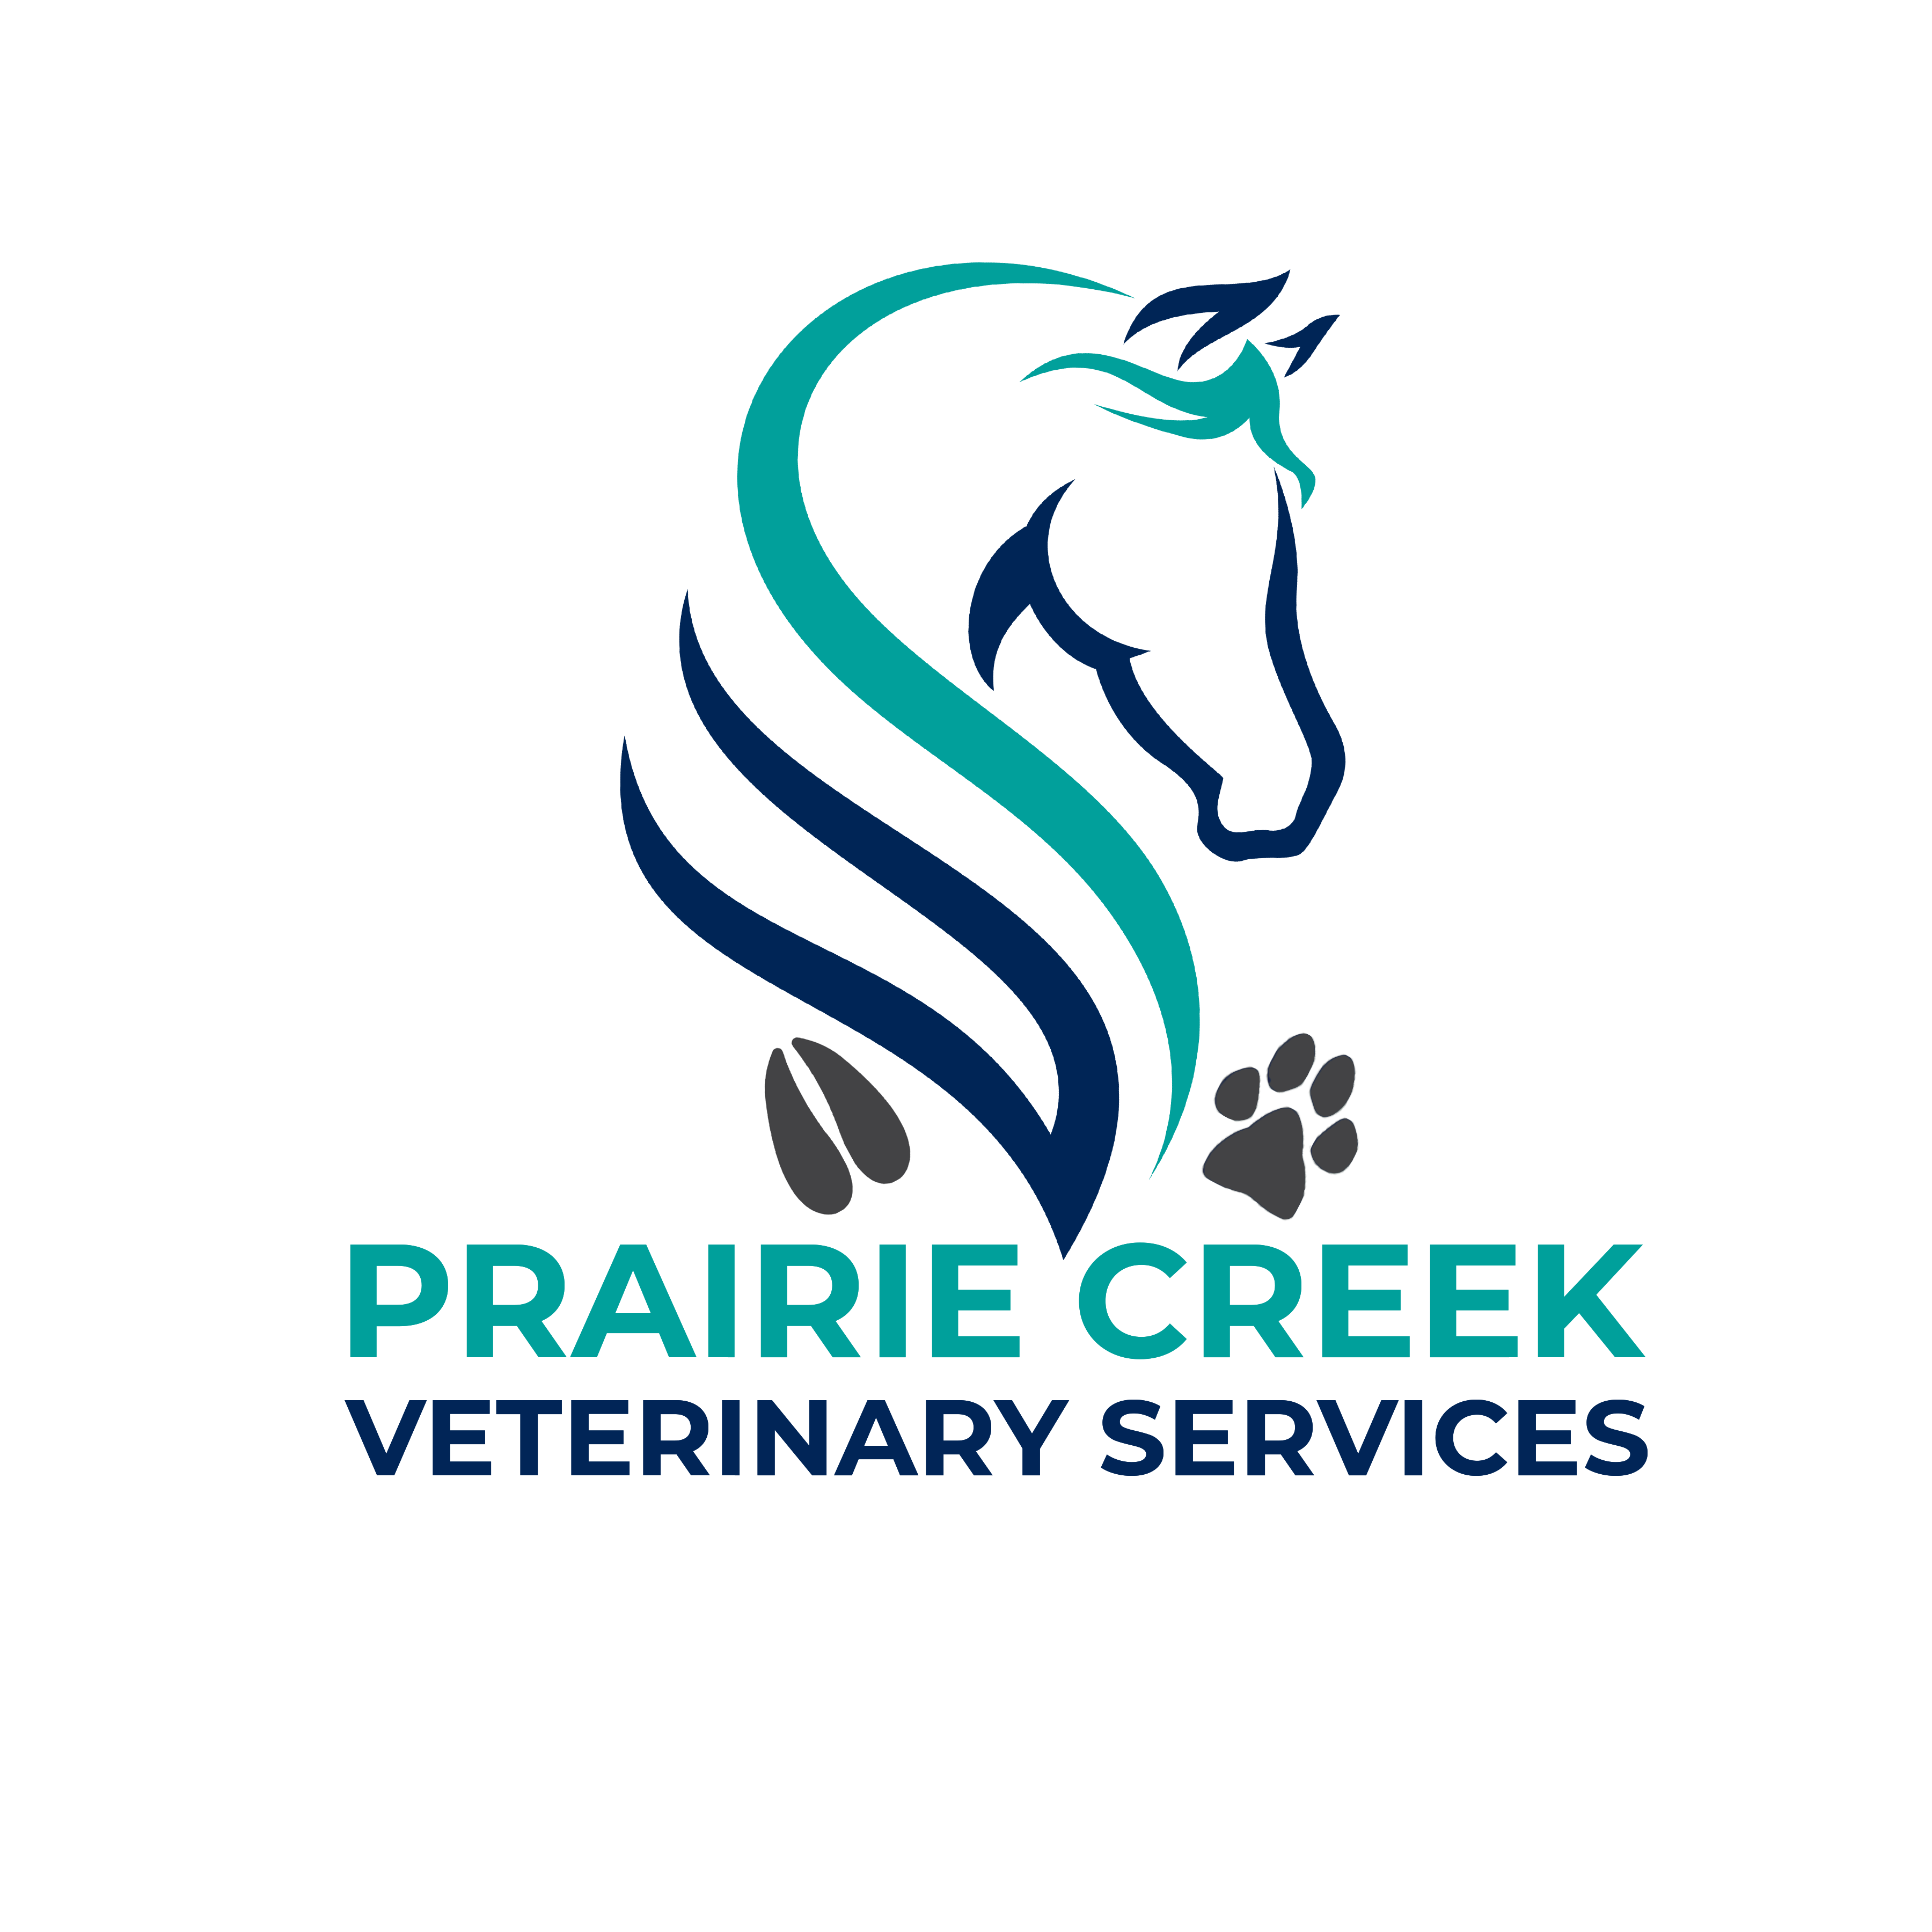 Prairie Creek Veterinary Services